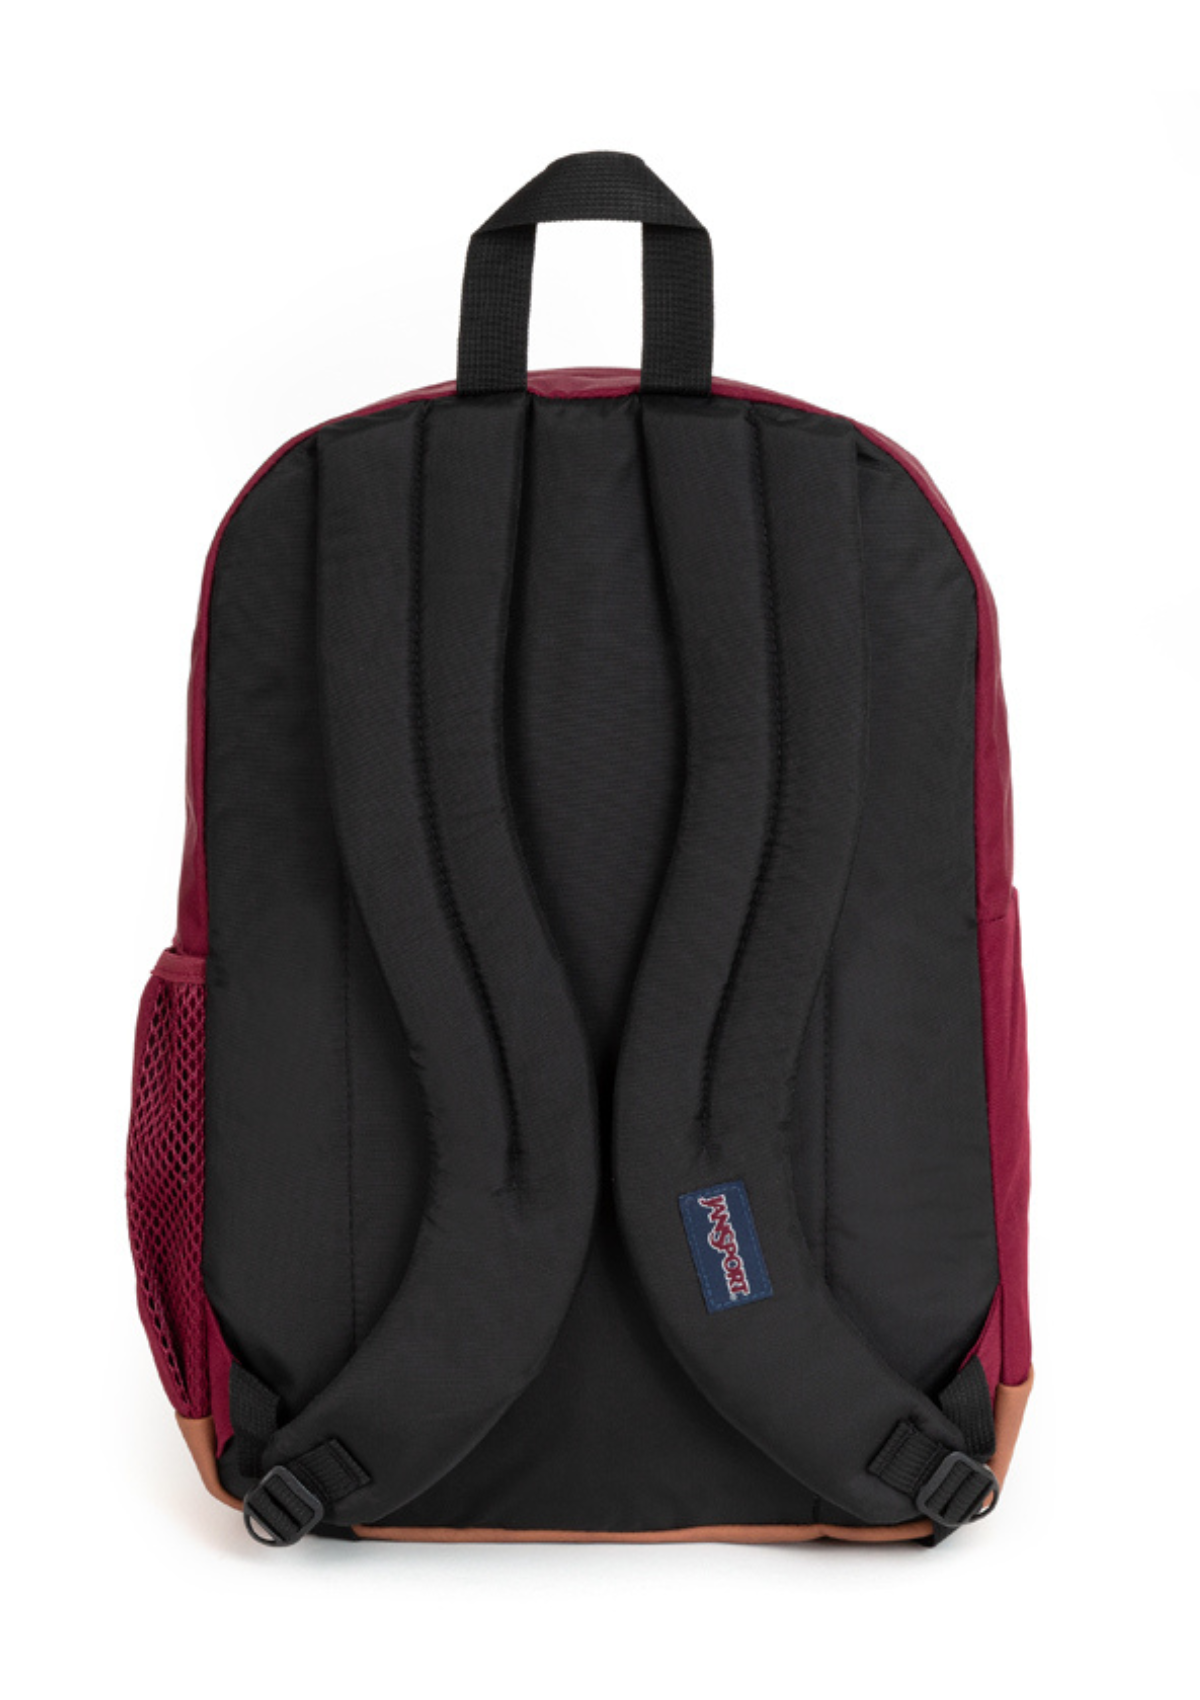 JanSport Backpacks Cool Student Russet Red